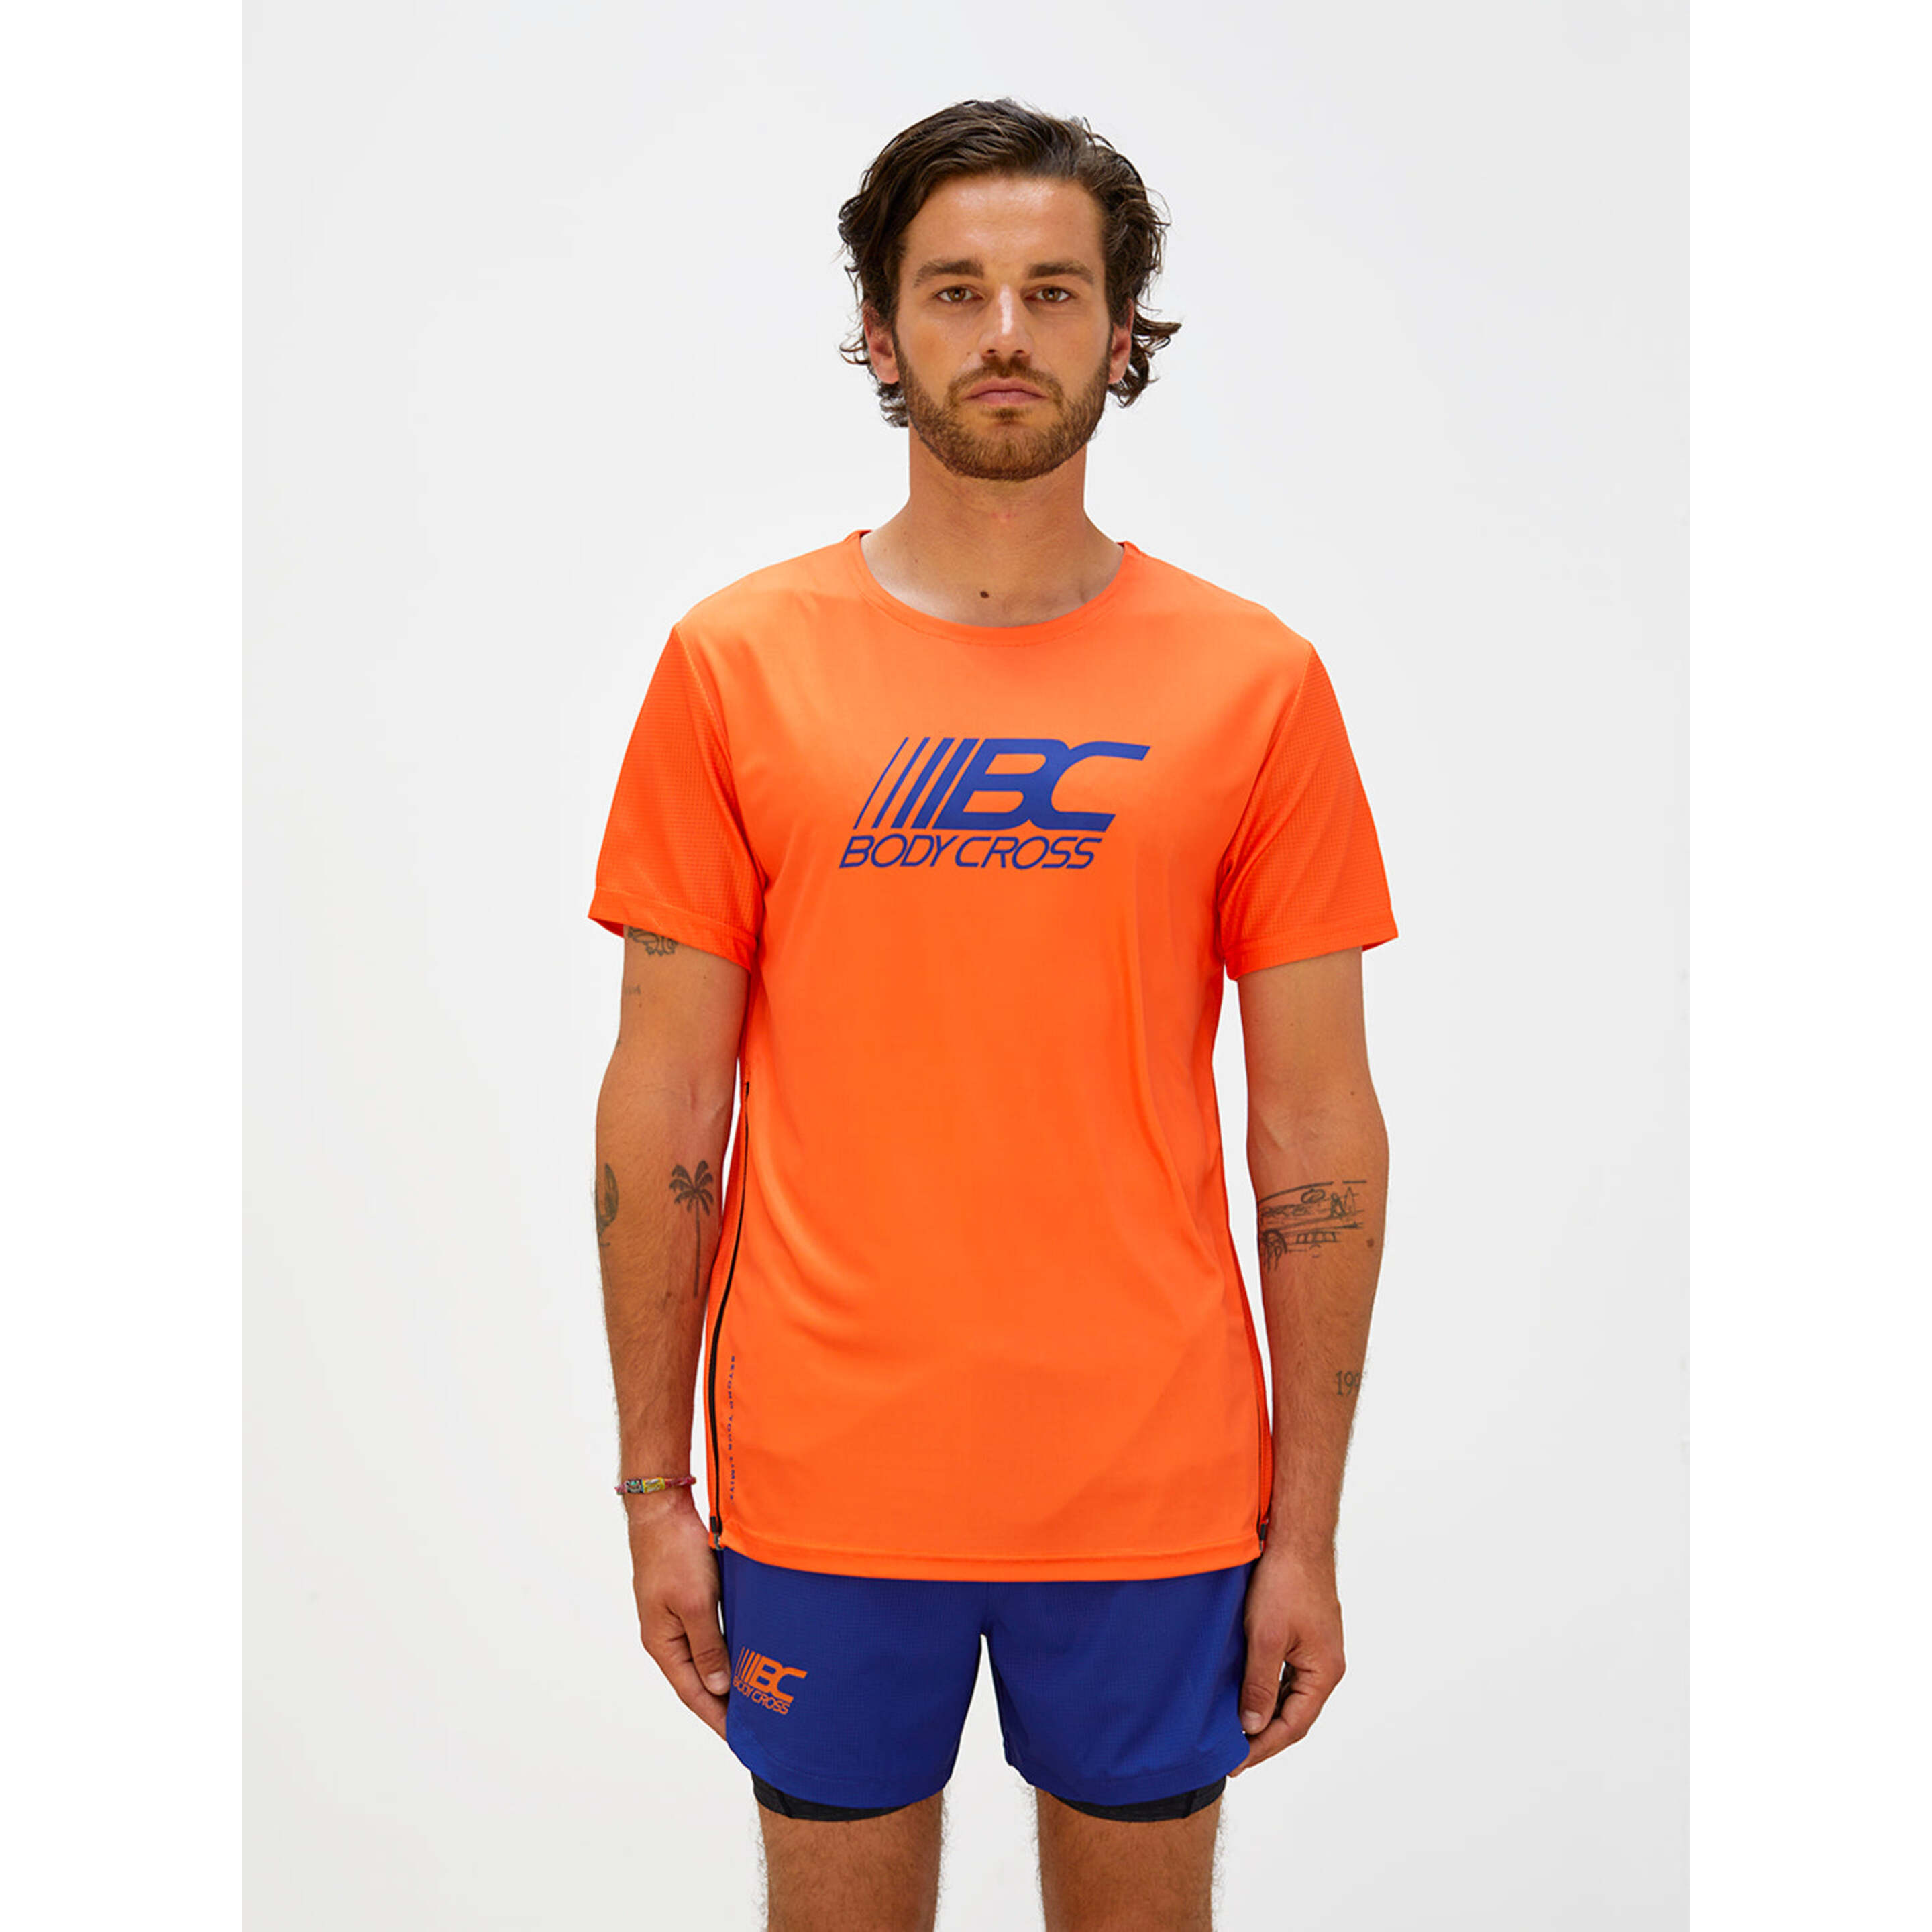 Camiseta Bodycross Birkan - naranja - 